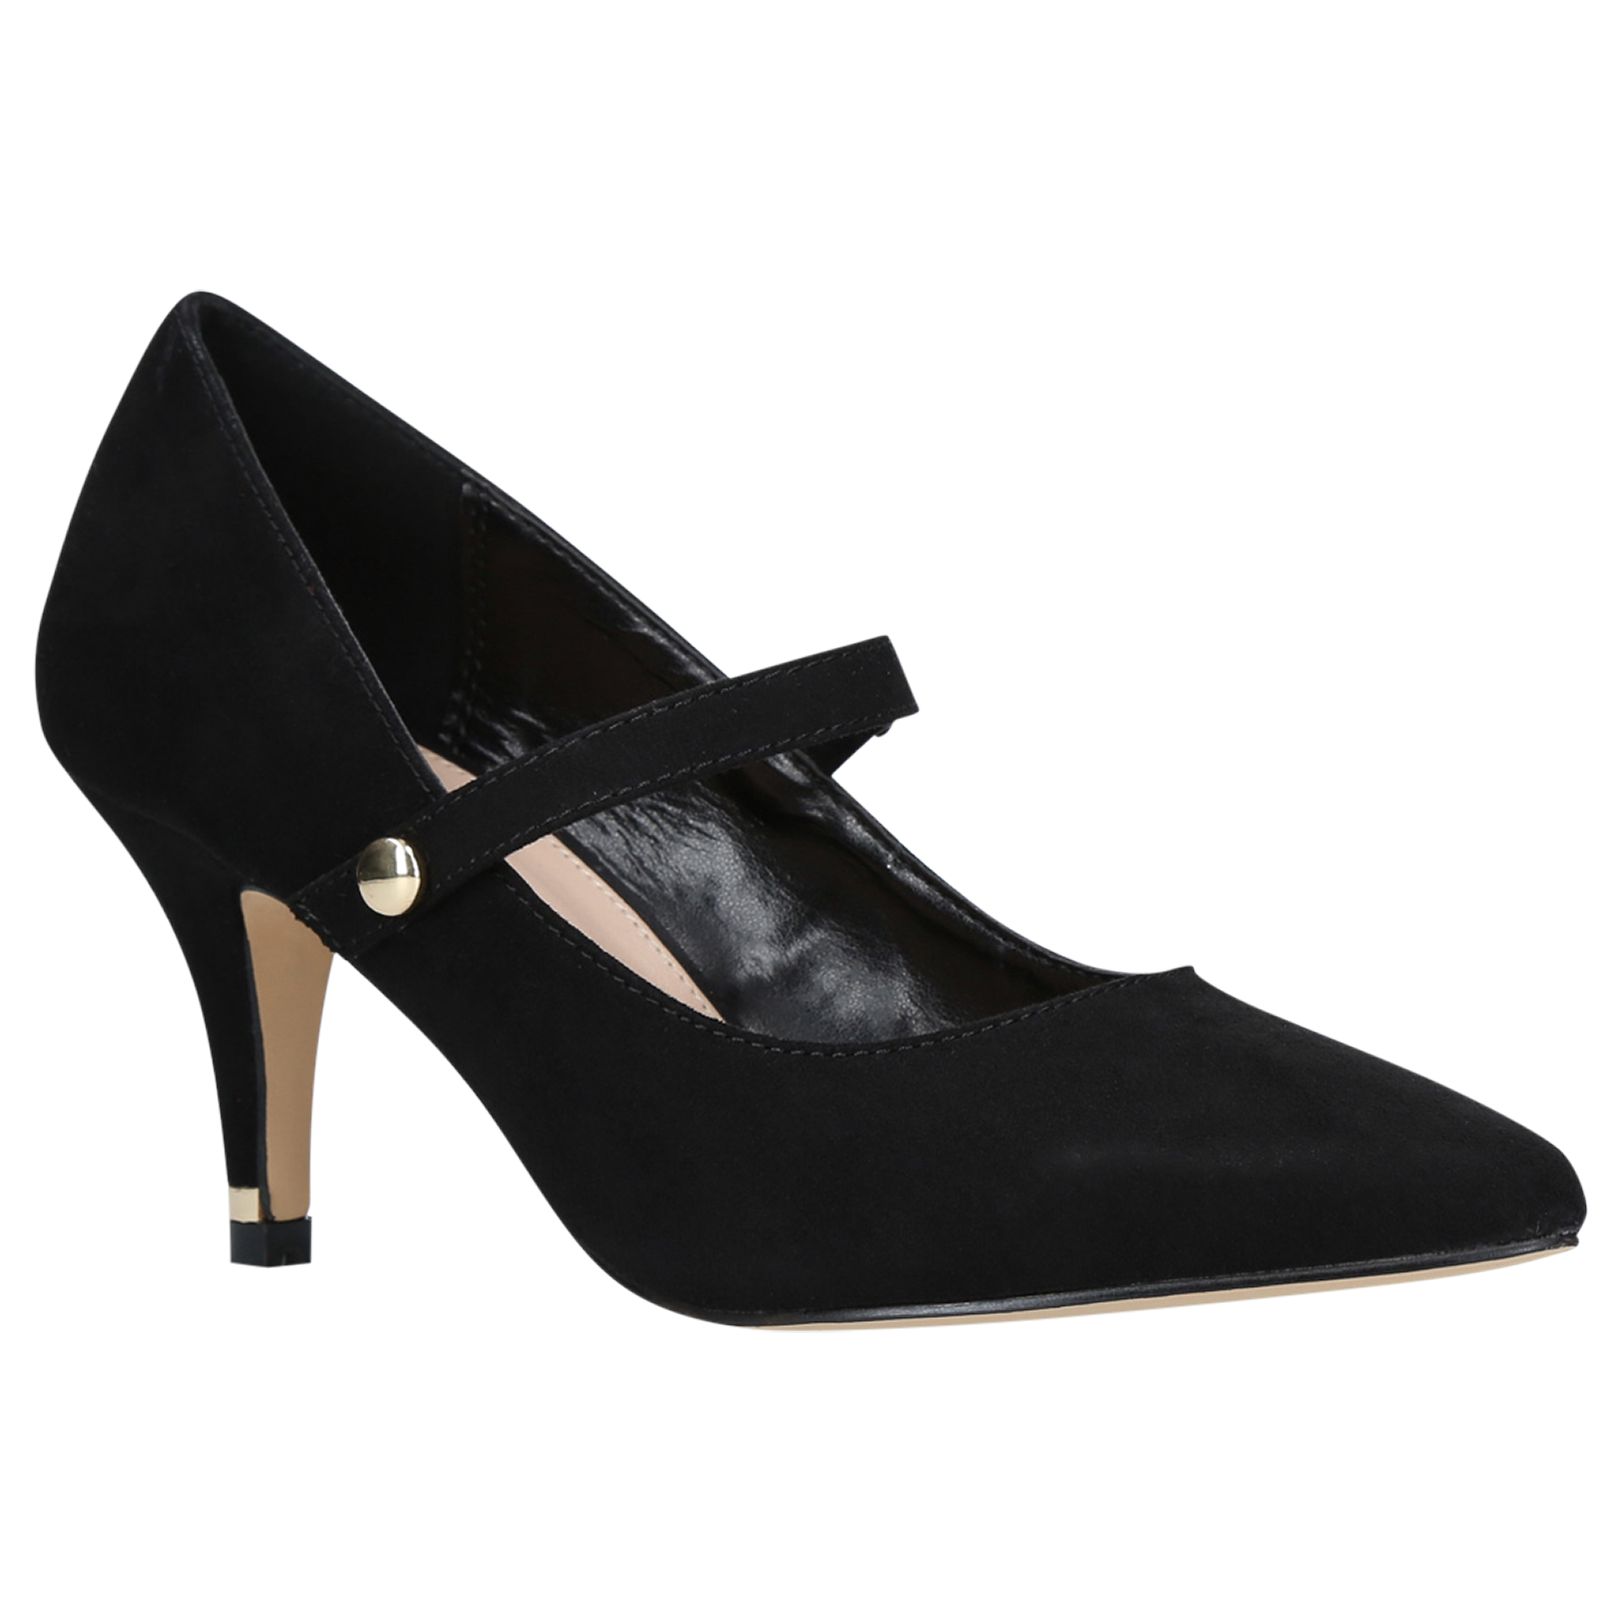 Carvela Kream Court Shoes, Black, 3